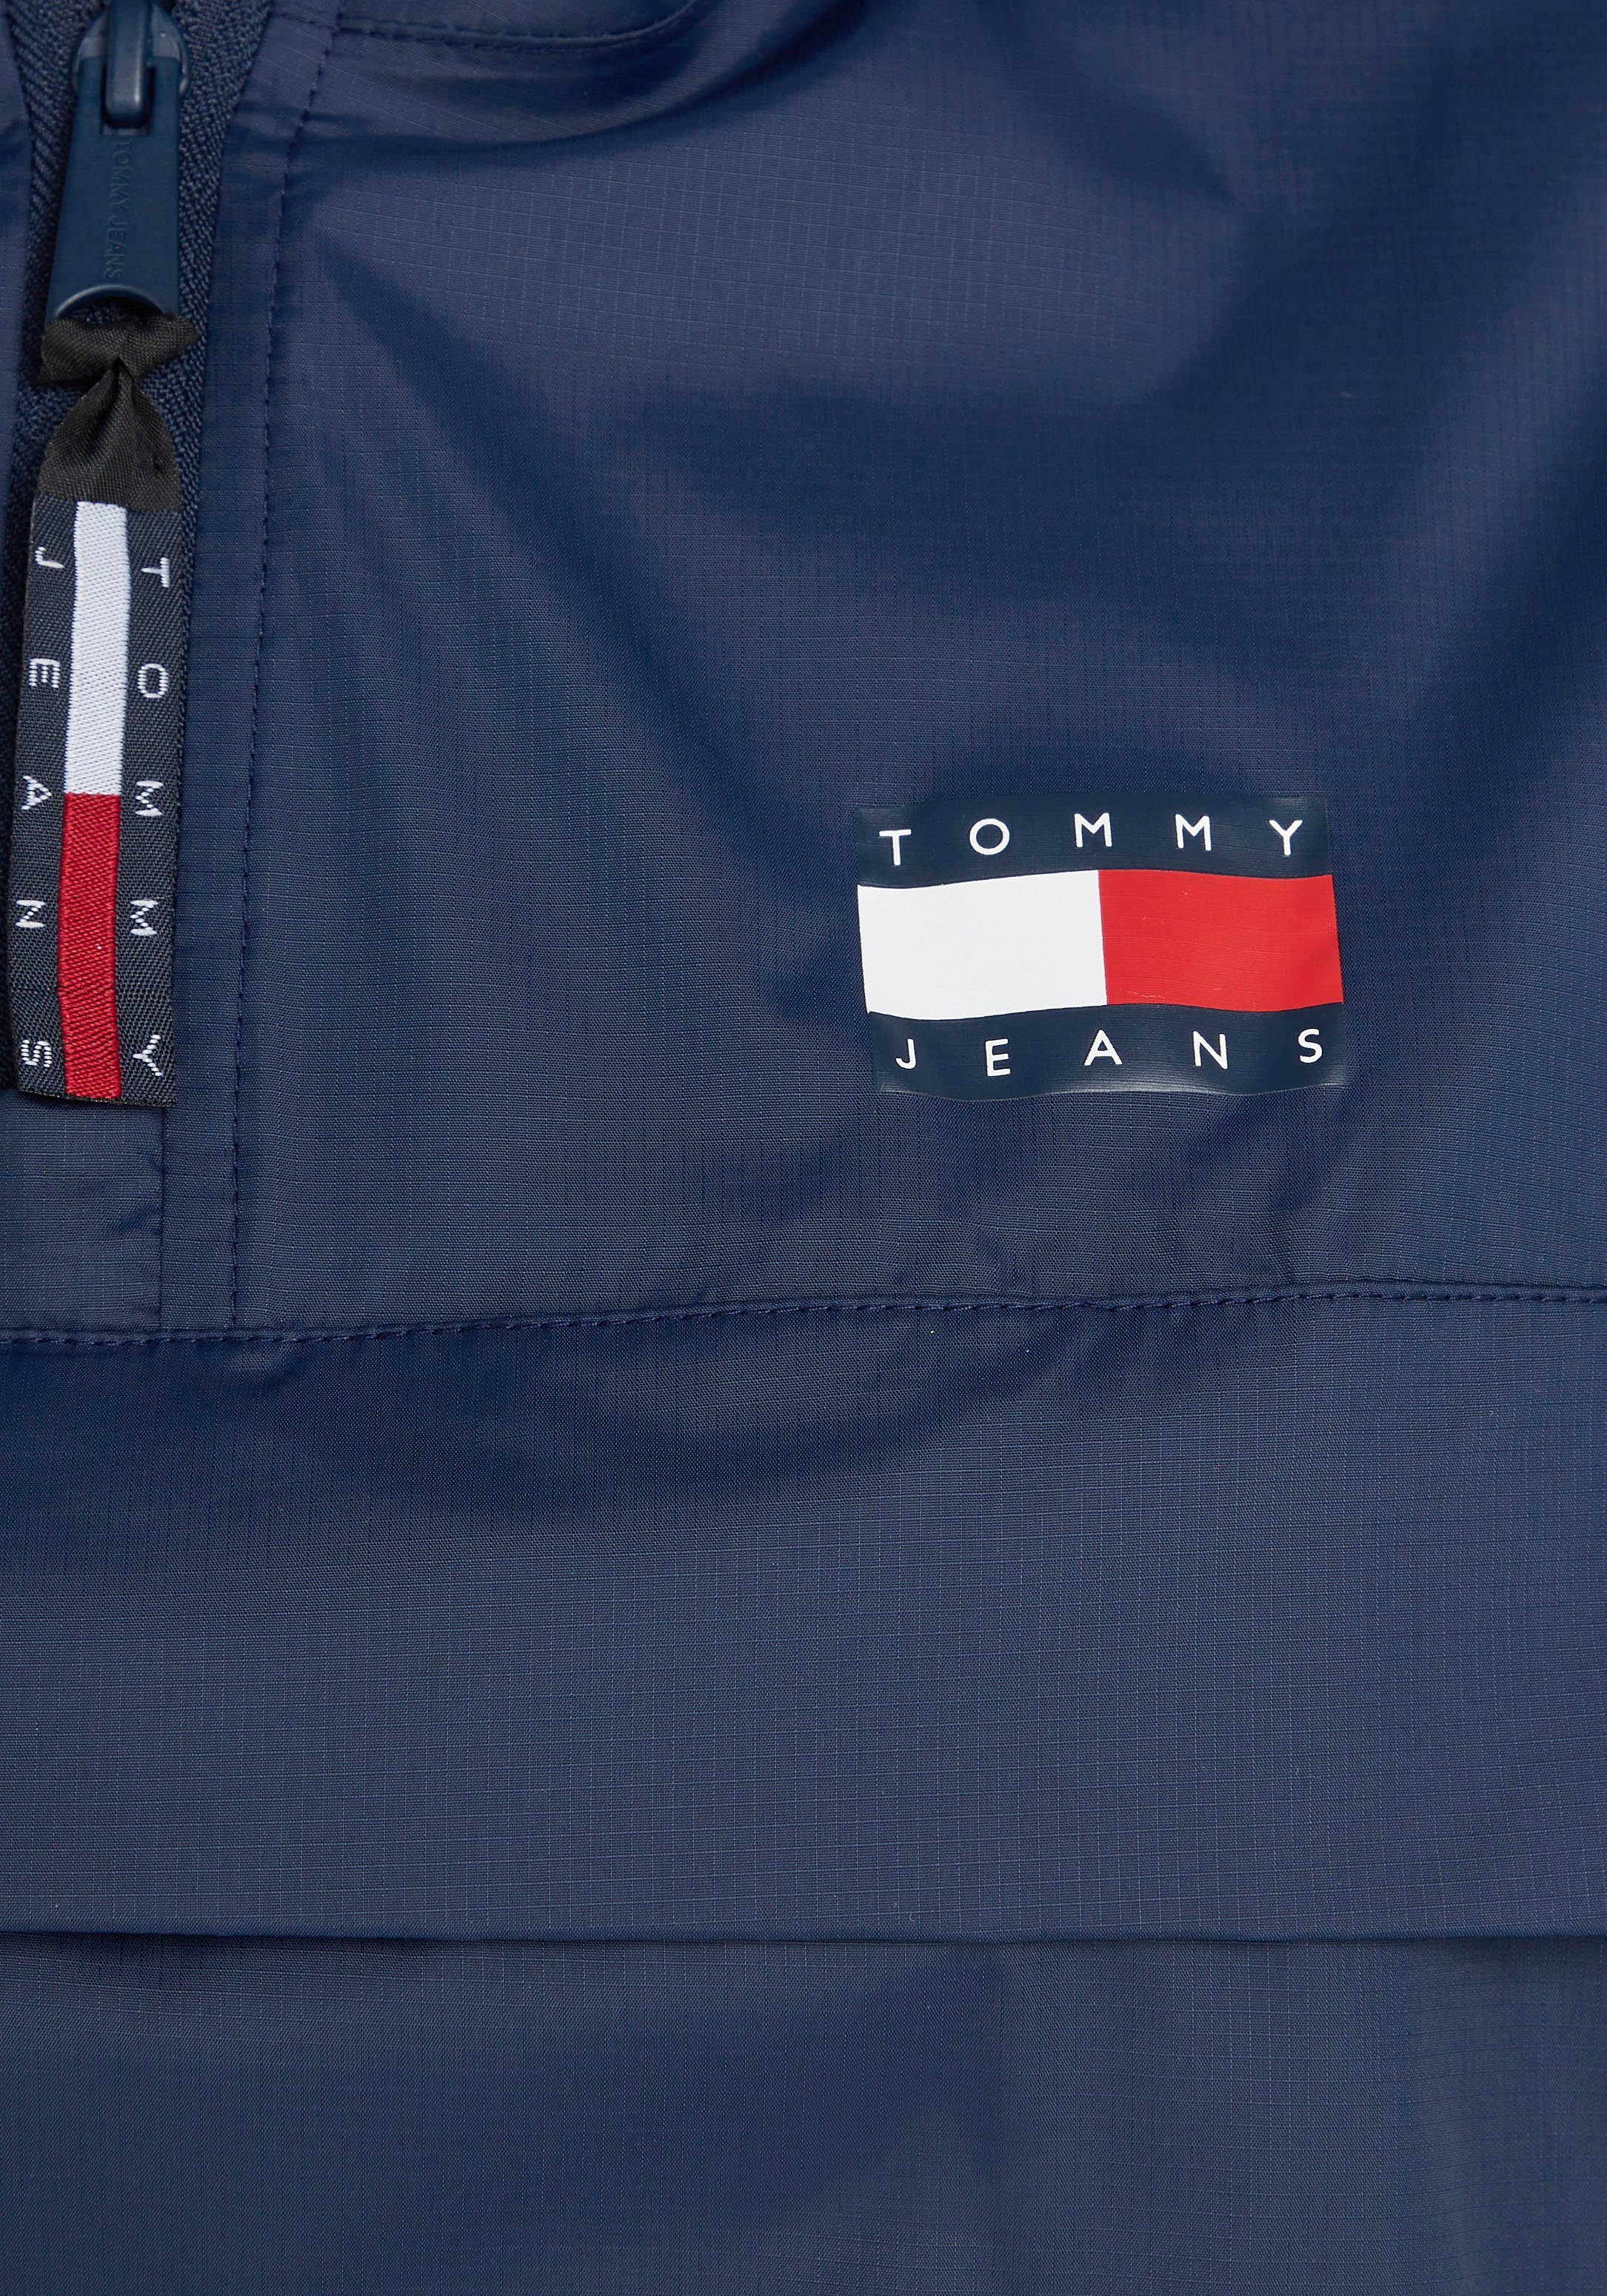 Jeans Tommy CHICAGO Twilight-Navy PCKABLE TECH kontrastfarbenen mit Parka Details TJW POPOVER